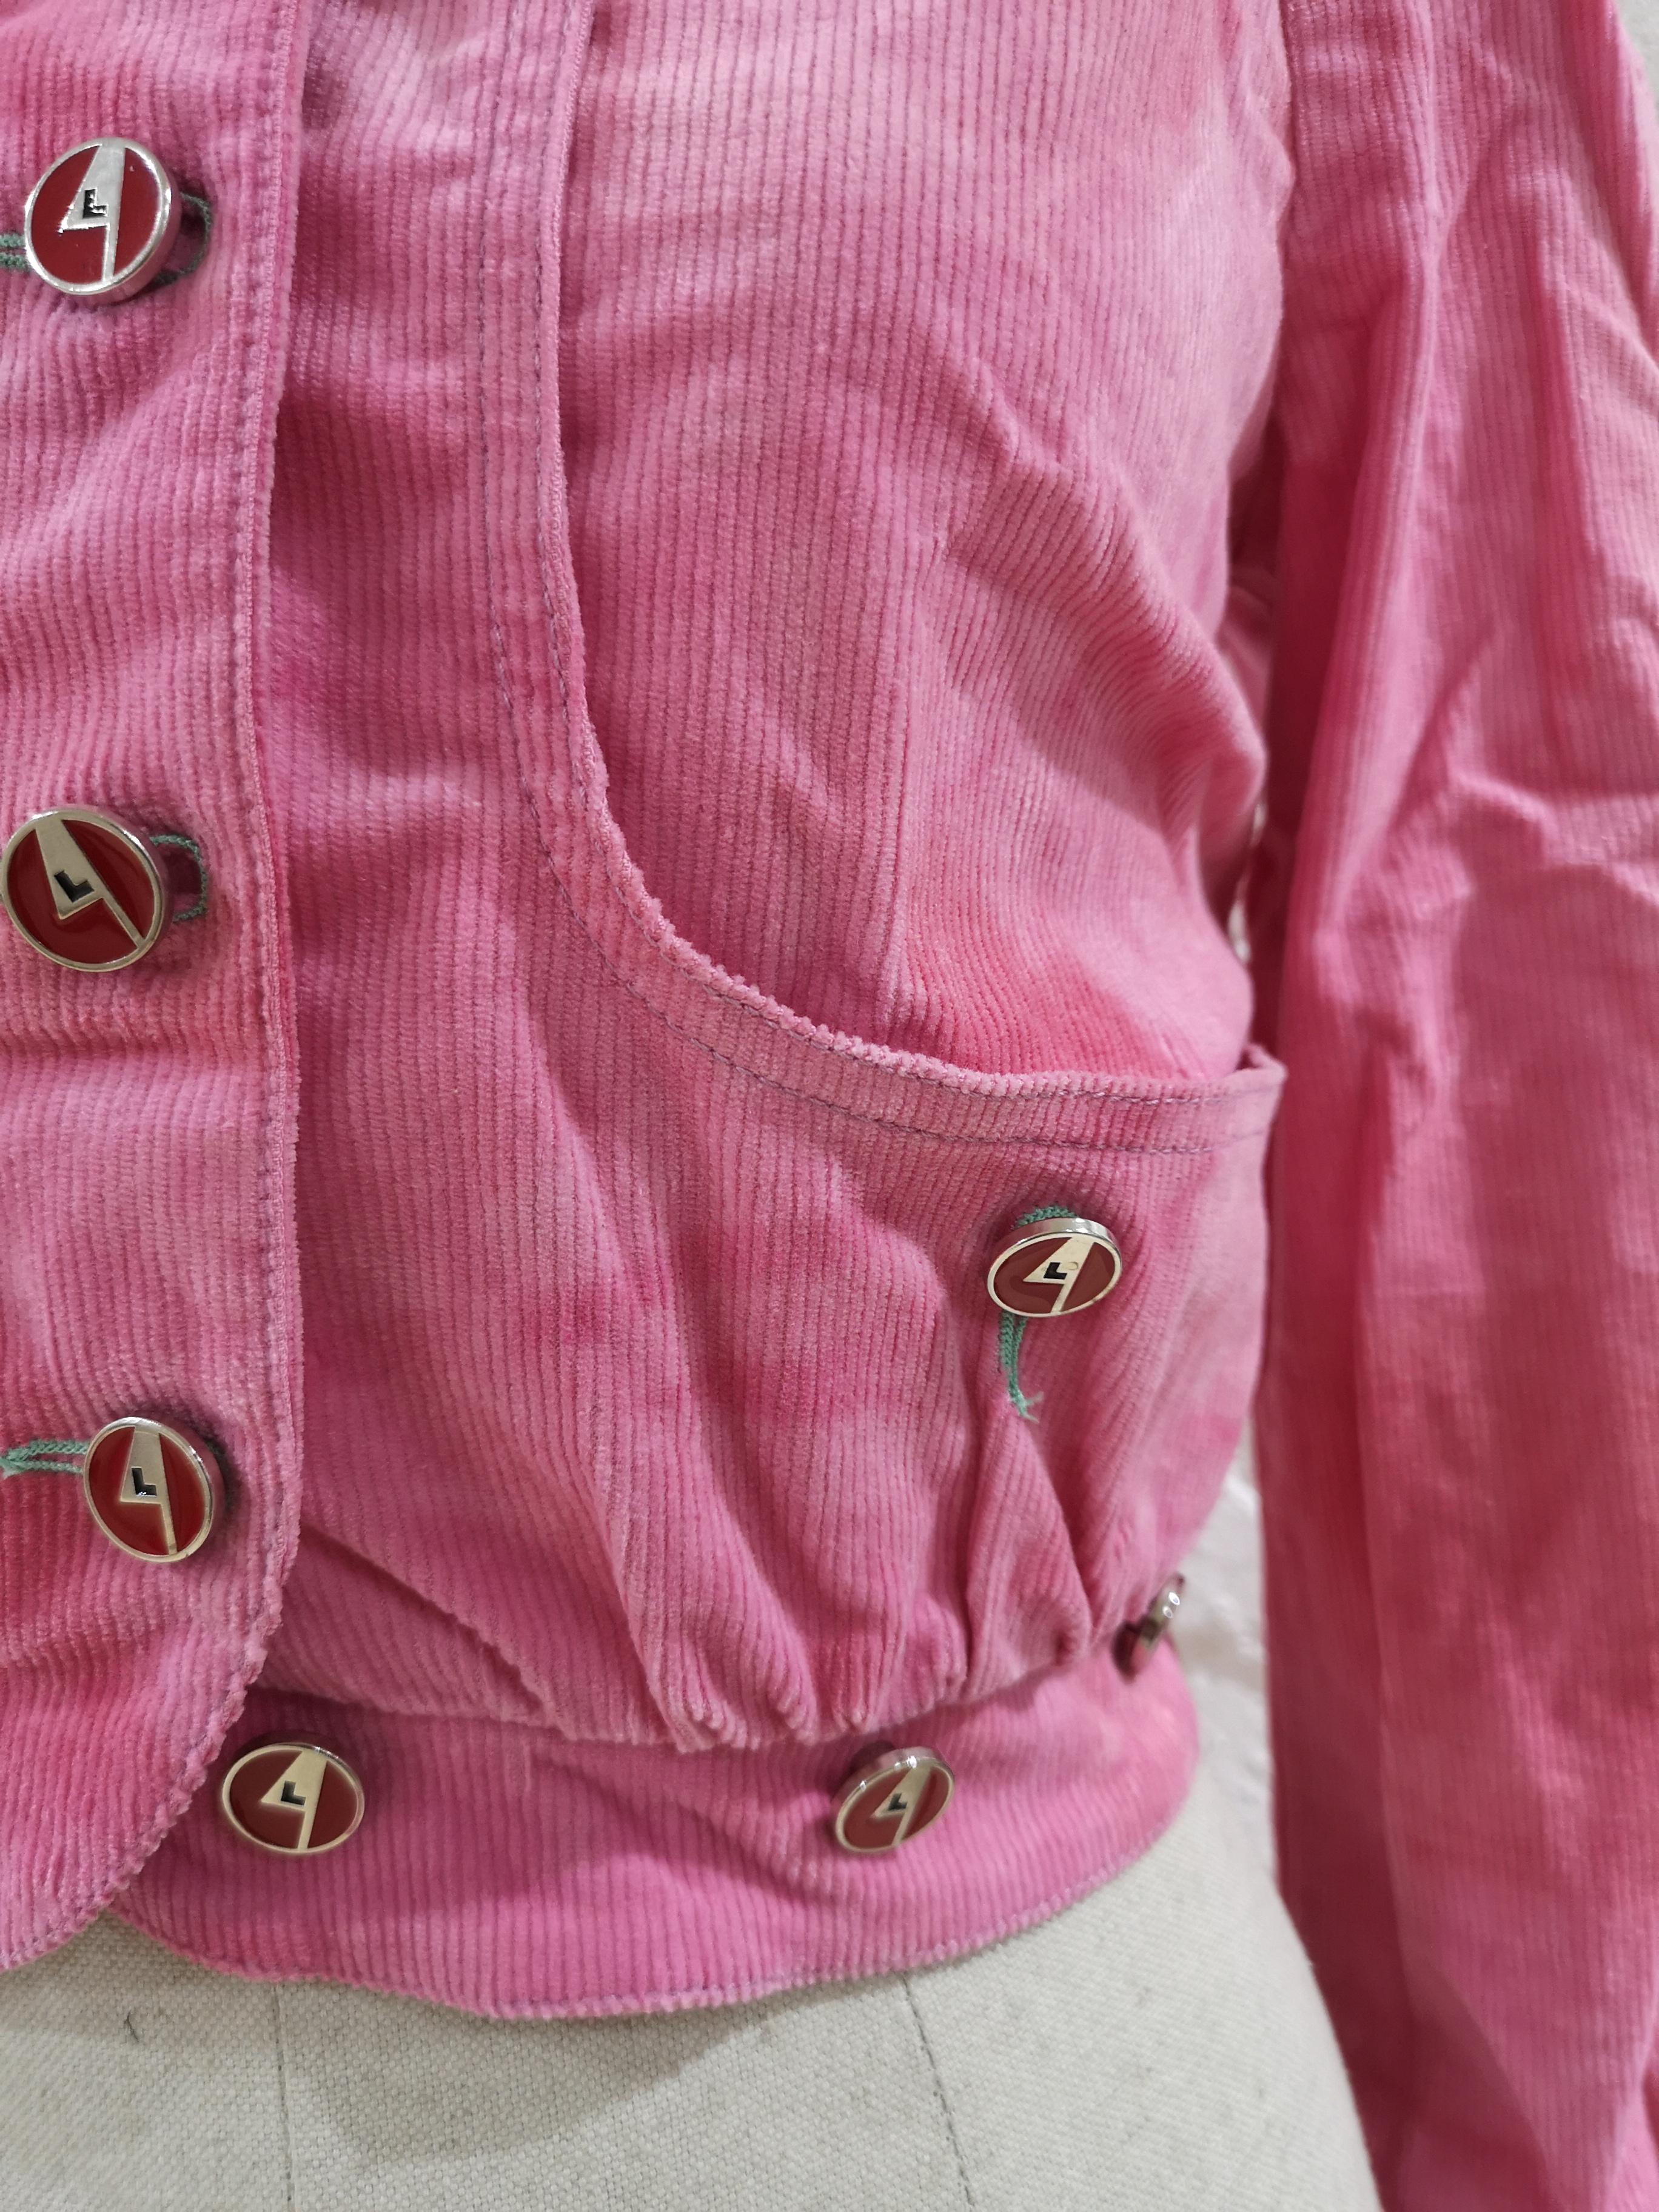 christian lacroix pink jacket